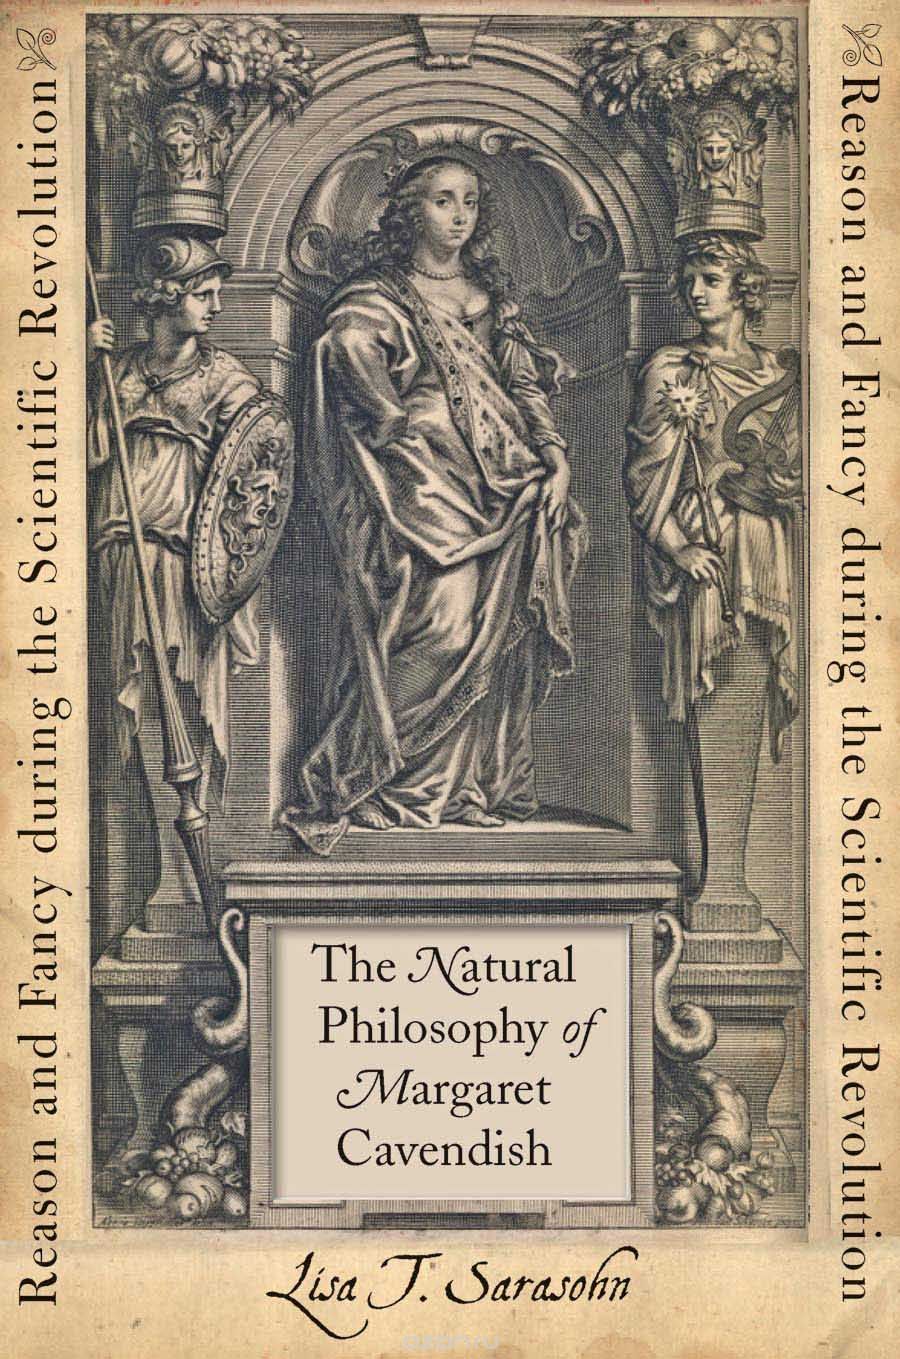 Скачать книгу "The Natural Philosophy of Margaret Cavendish – Reason and Fancy during the Scientific Revolution"